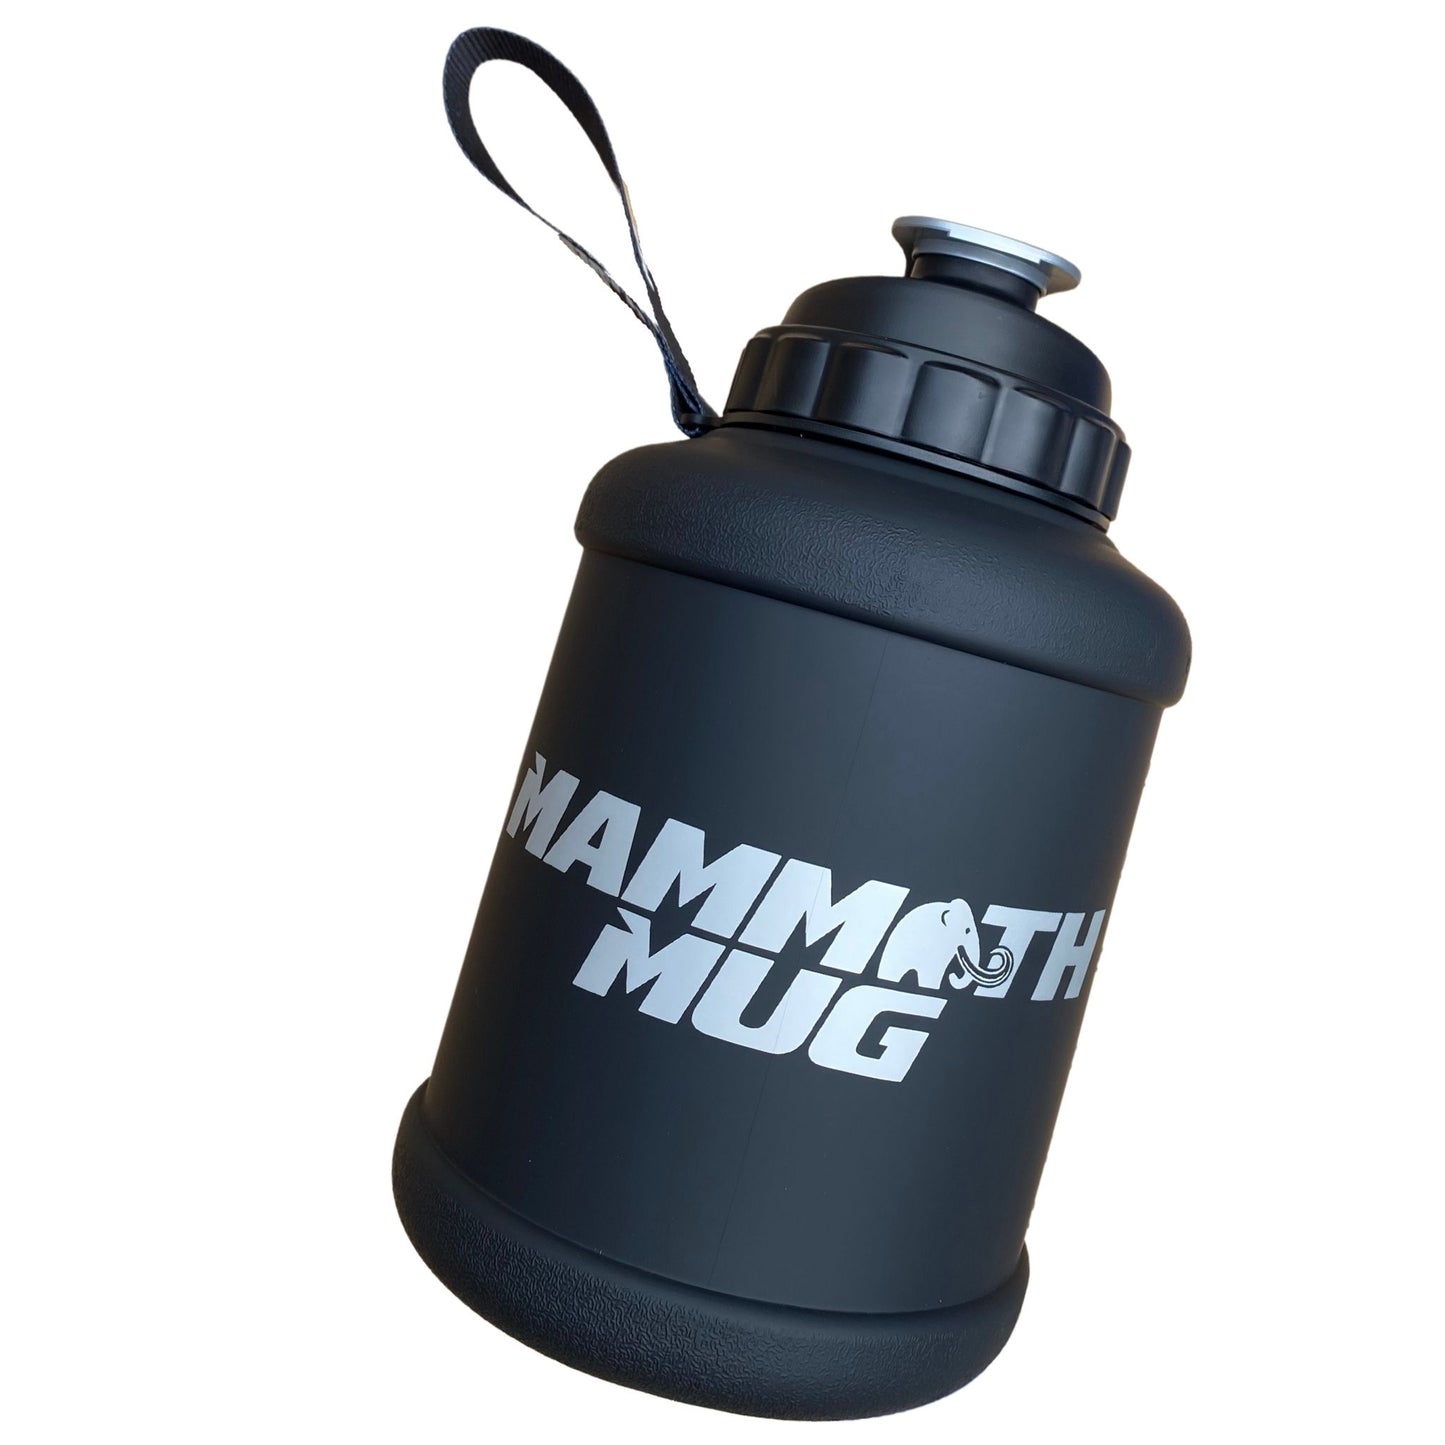 Best large water bottle, Mammoth Mug 2.5L water bottle in Matte Black hanging